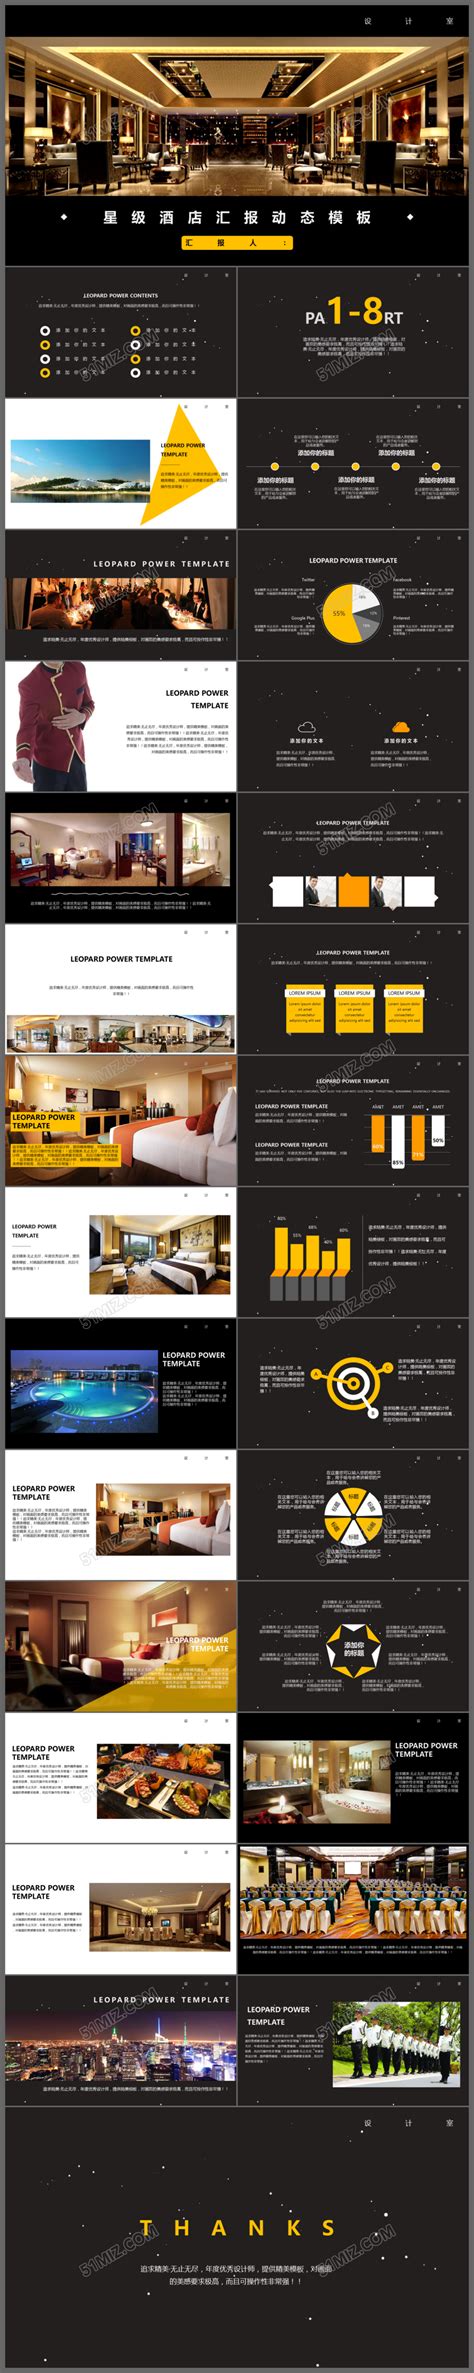 A10酒店营销策划PPT模板(酒店营销策划PPT) - 正数办公